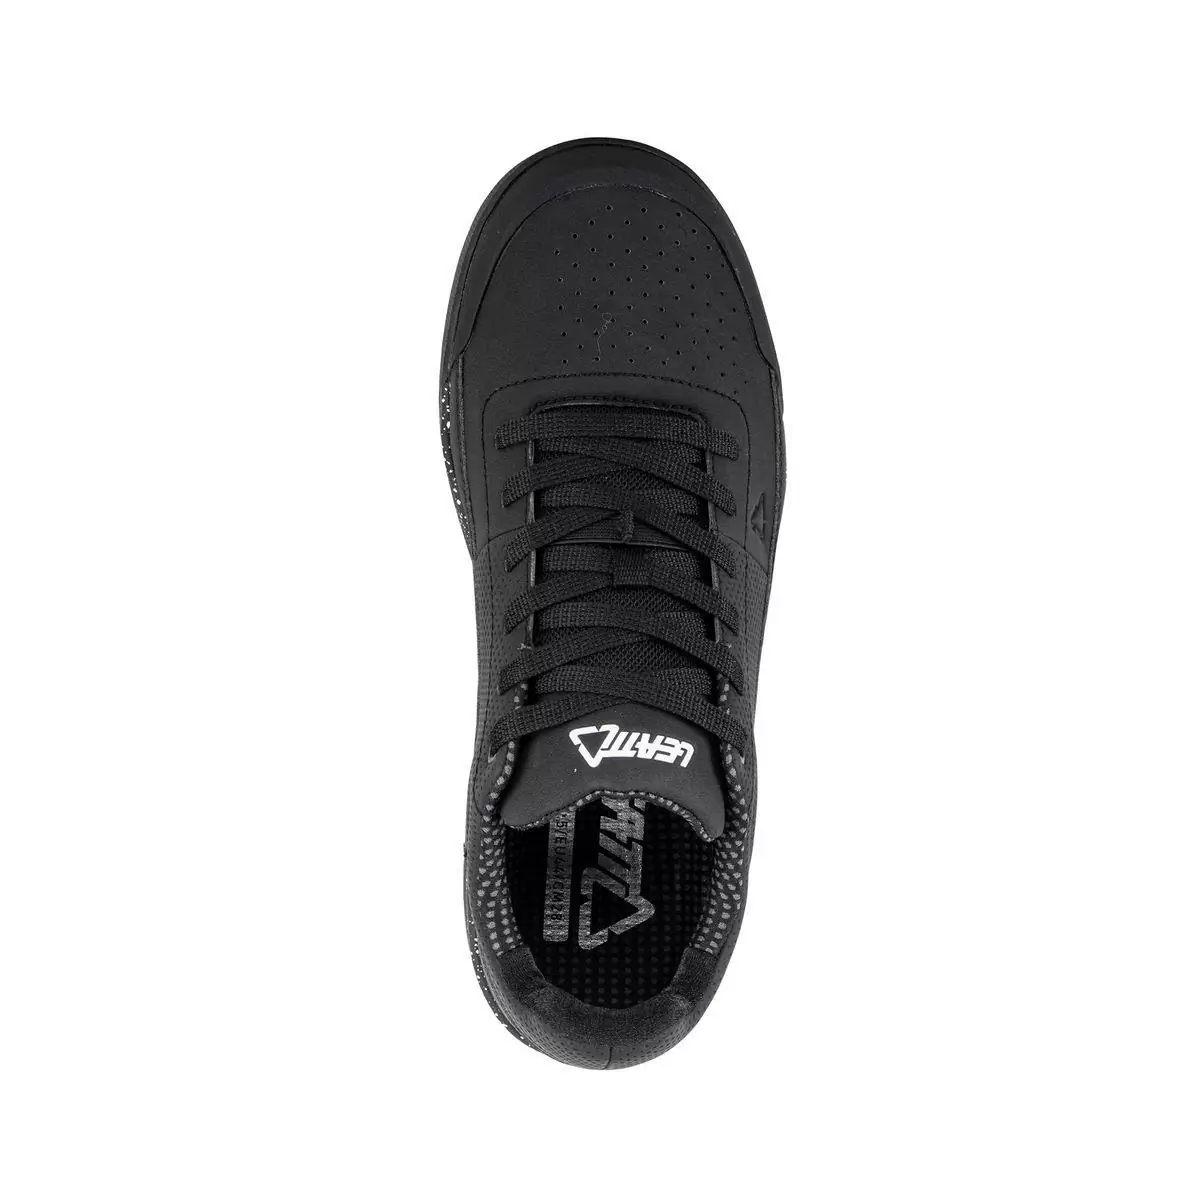 Mtb Shoes 2.0 Flat Black Size 44 #2